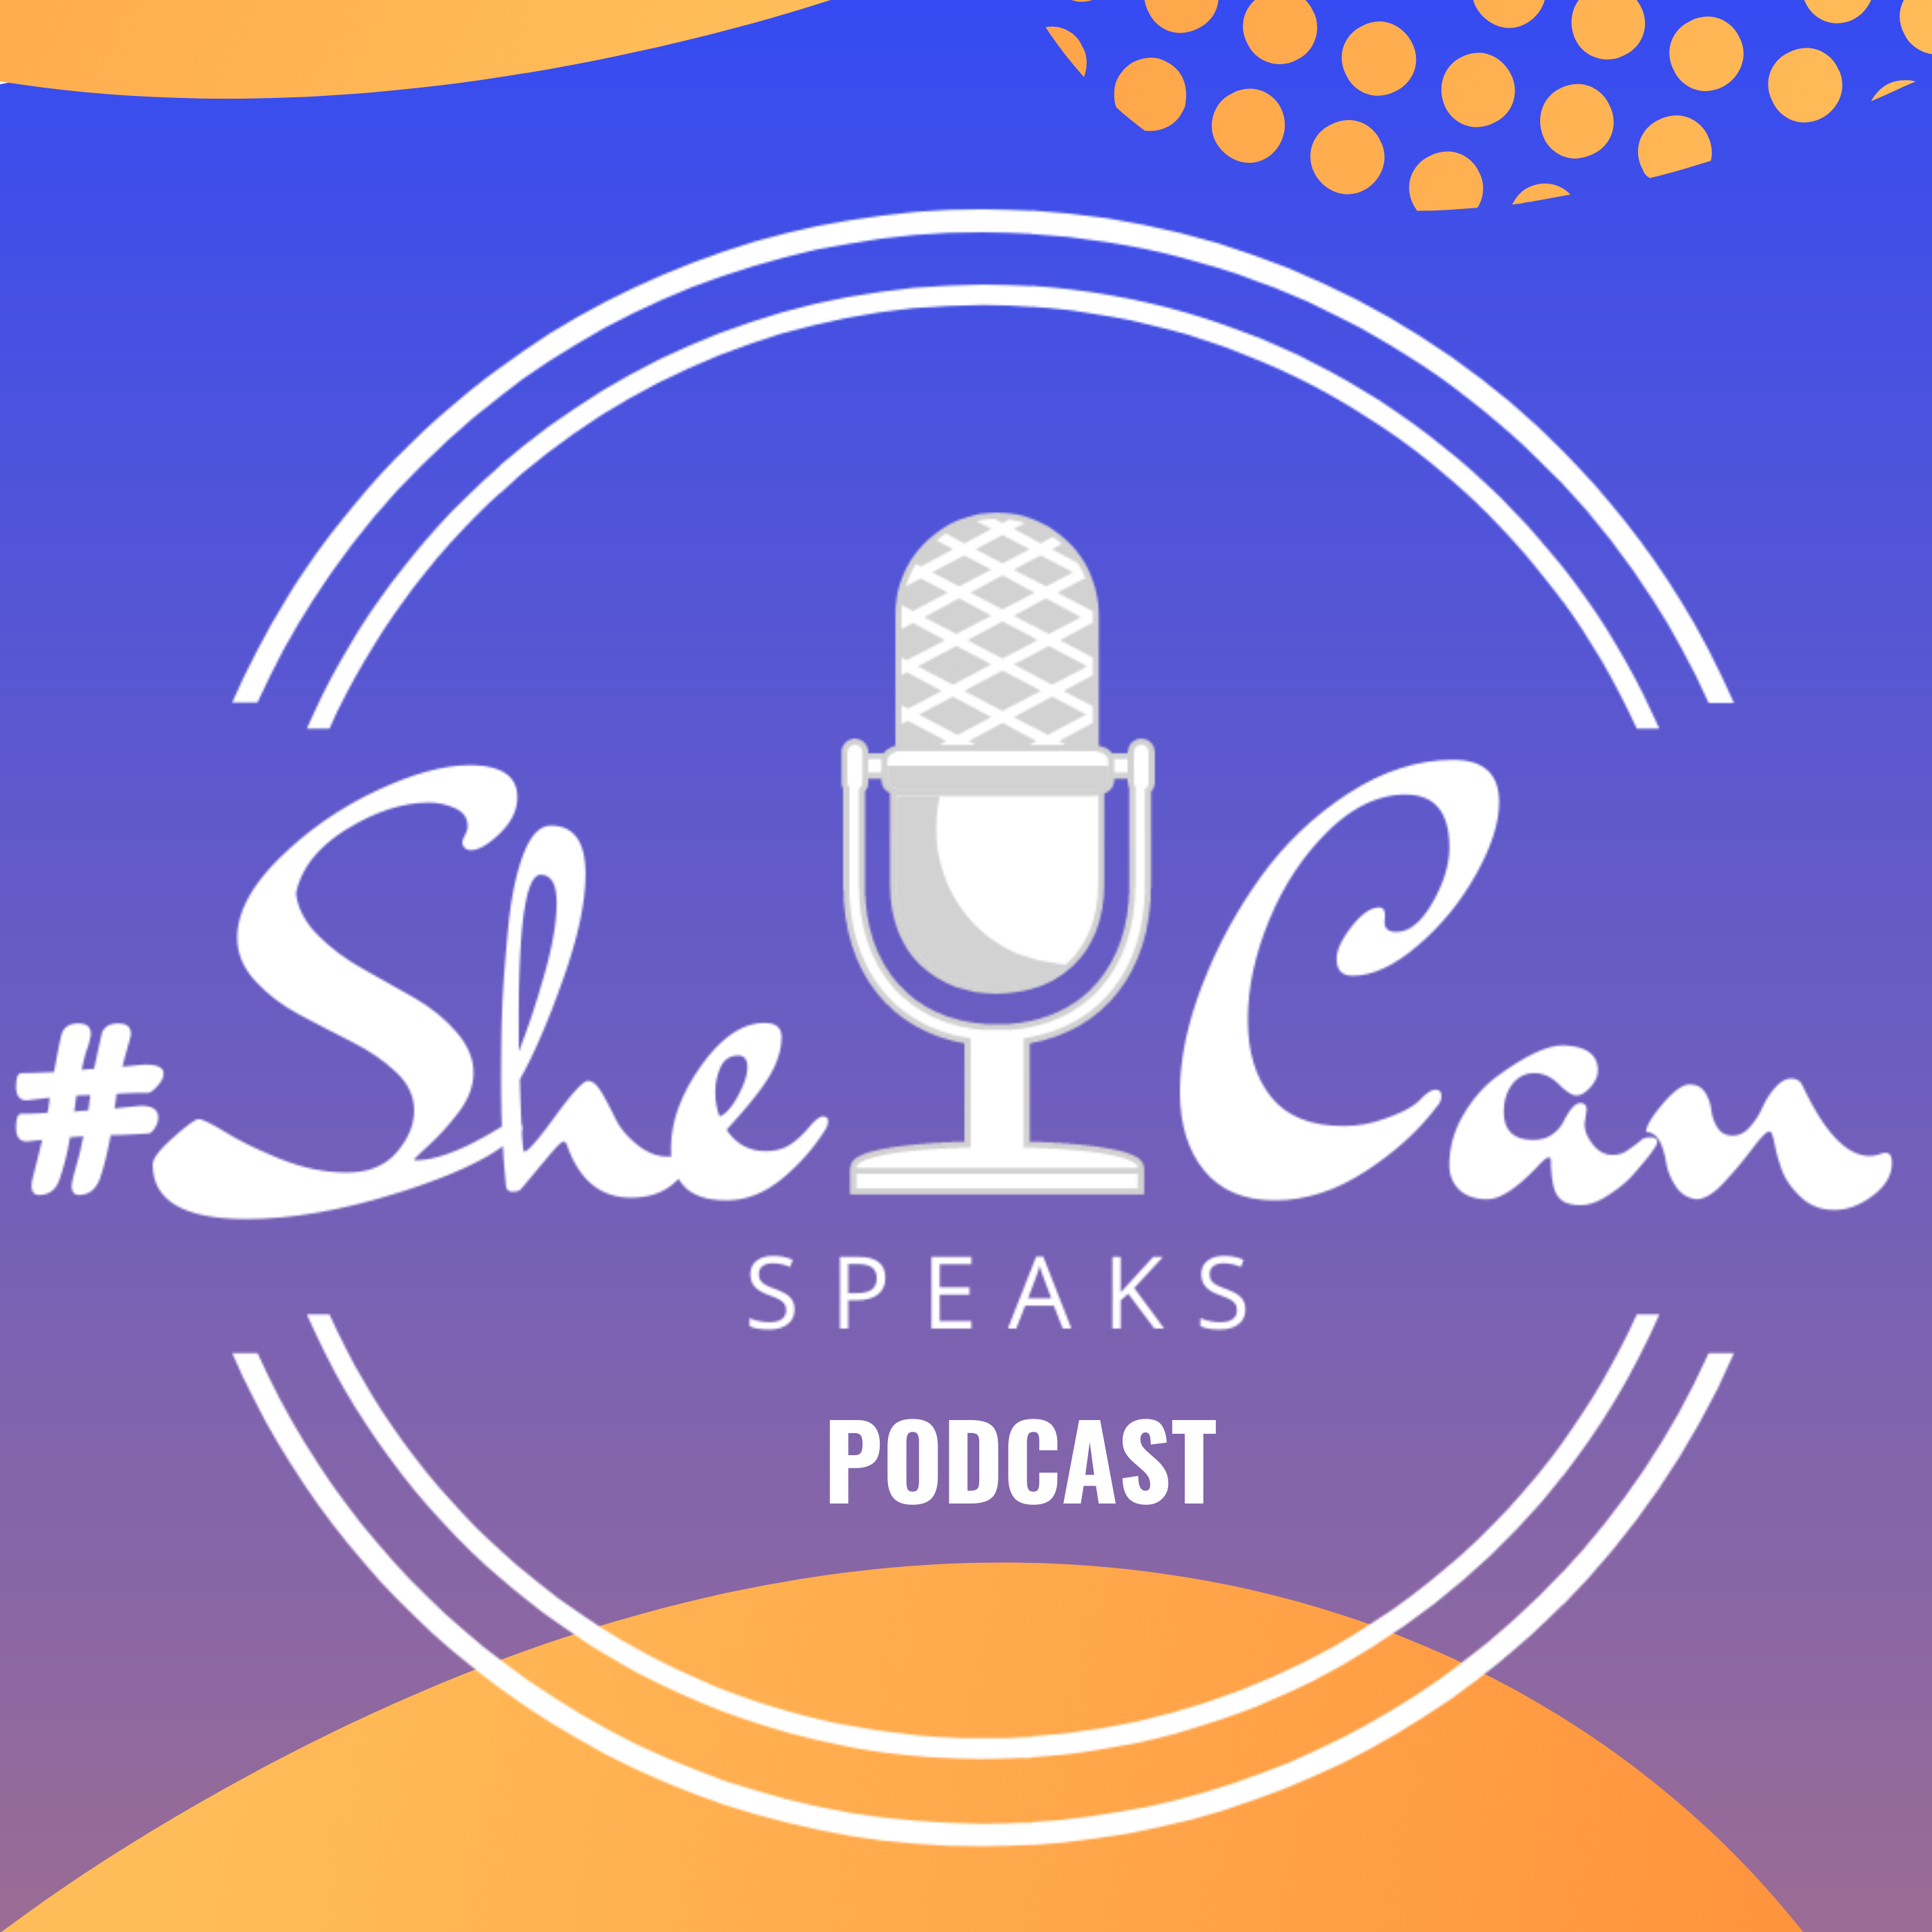 SheCan Speaks w/Michell Stockmann